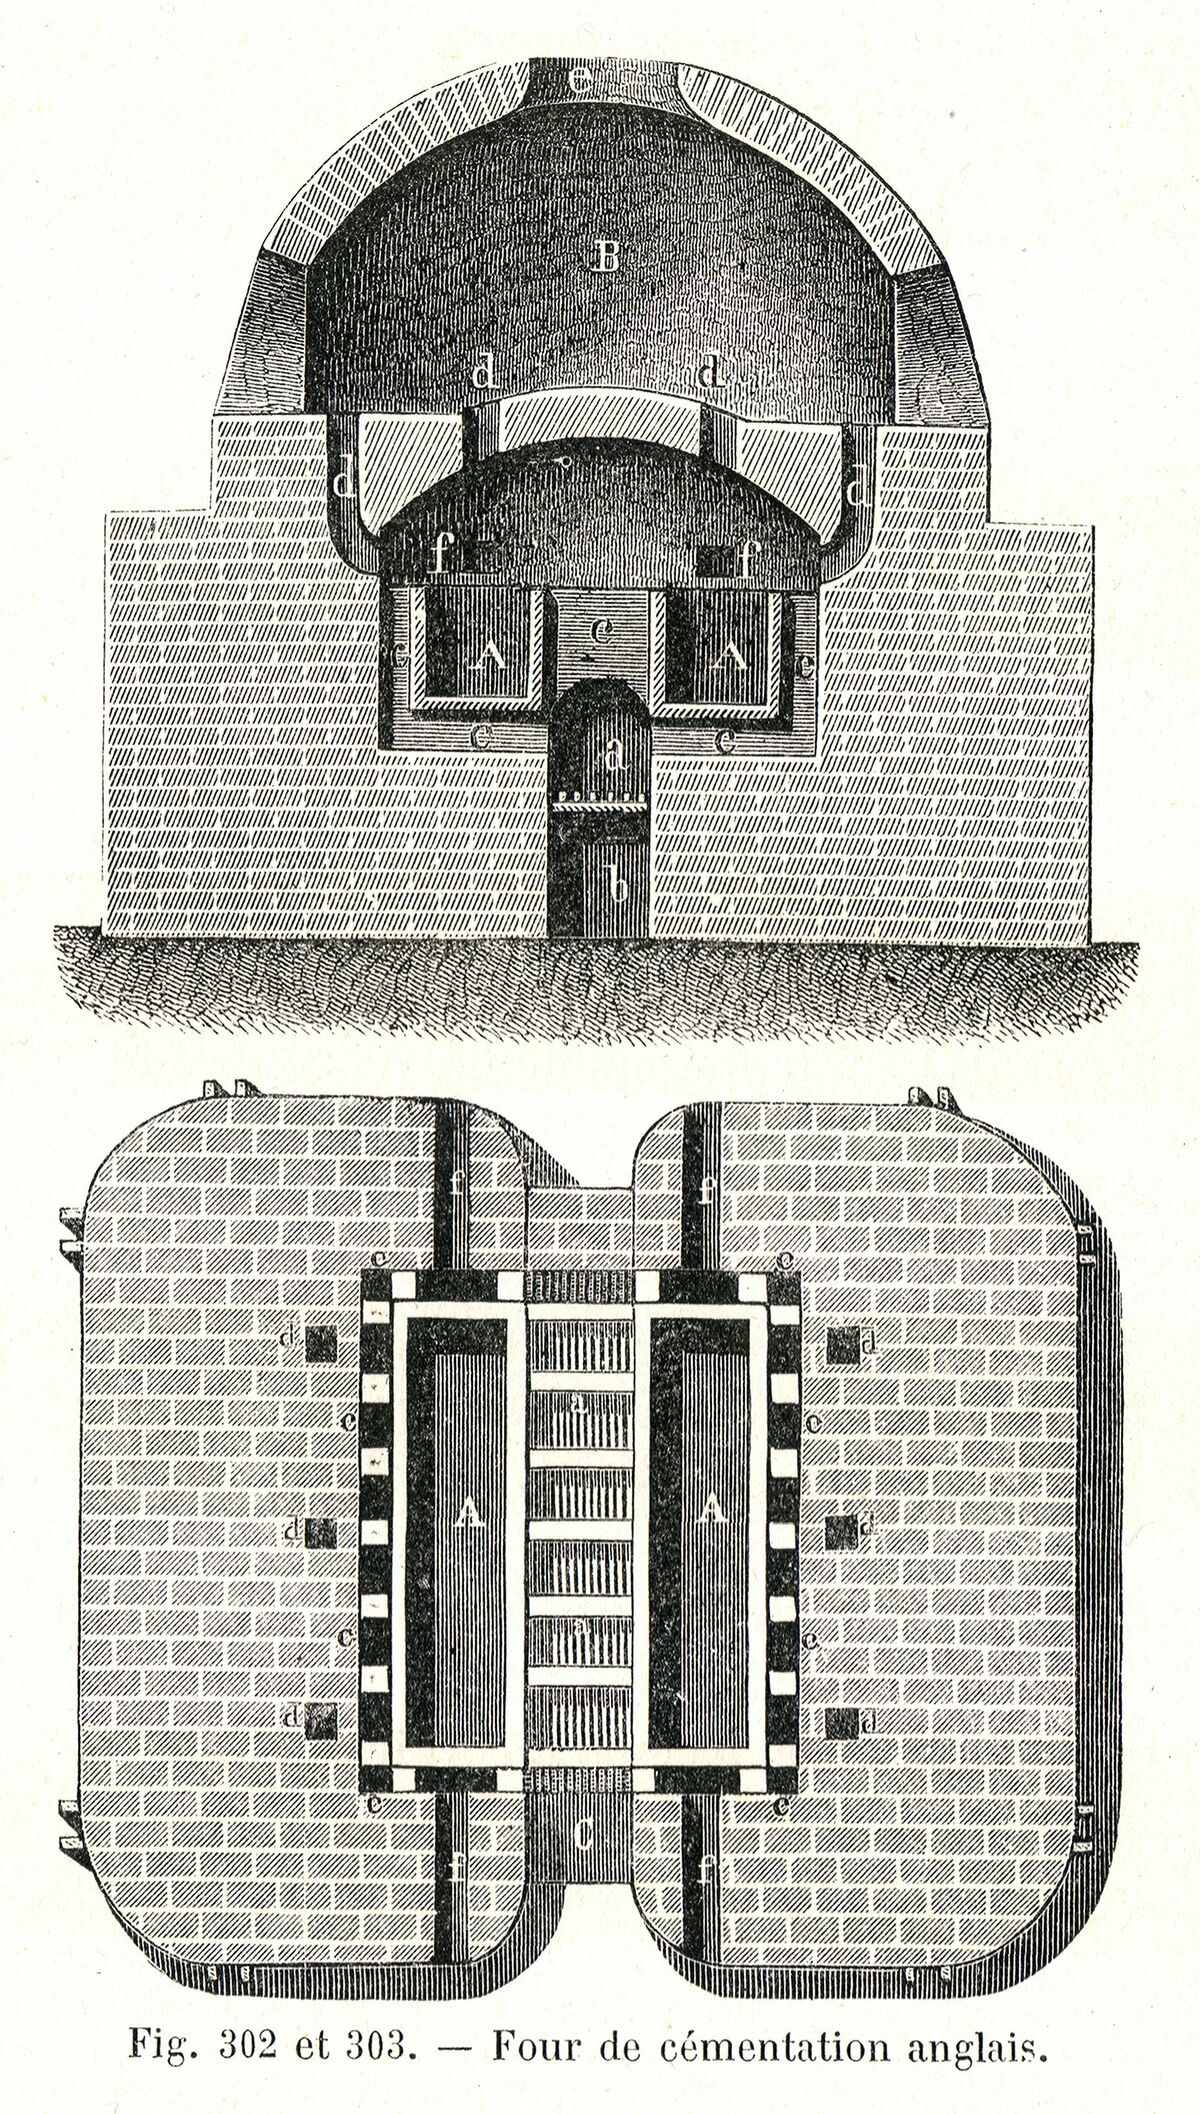 GFD 3/67: English blister steel kiln (illustration from Ledebur’s Handbuch zur Metallurgie, 1895)